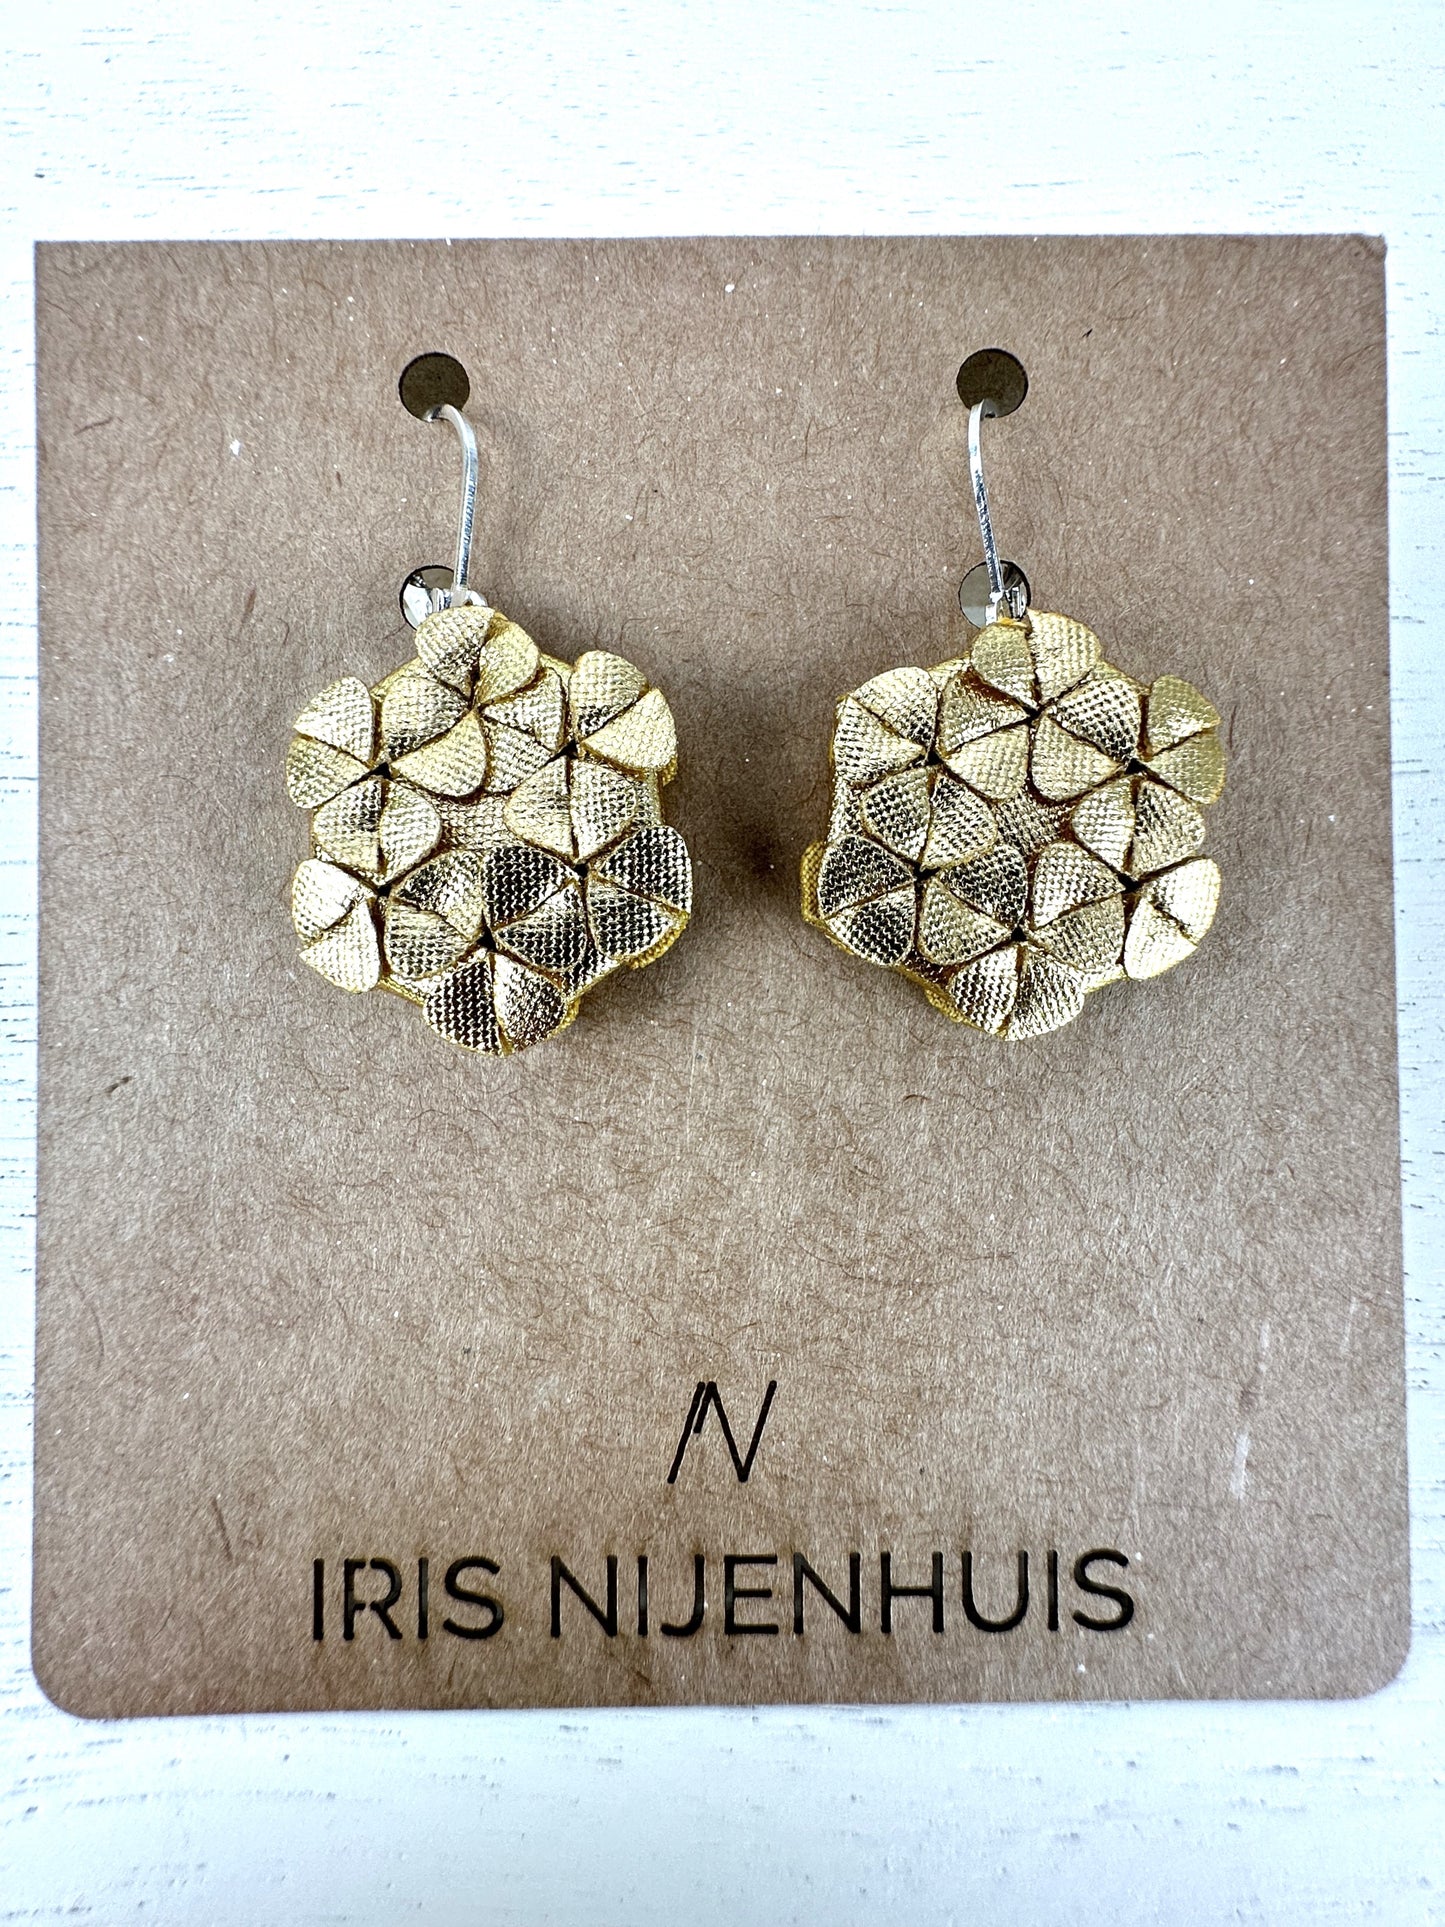 Iris Nijenhuis - The Mini's Earrings